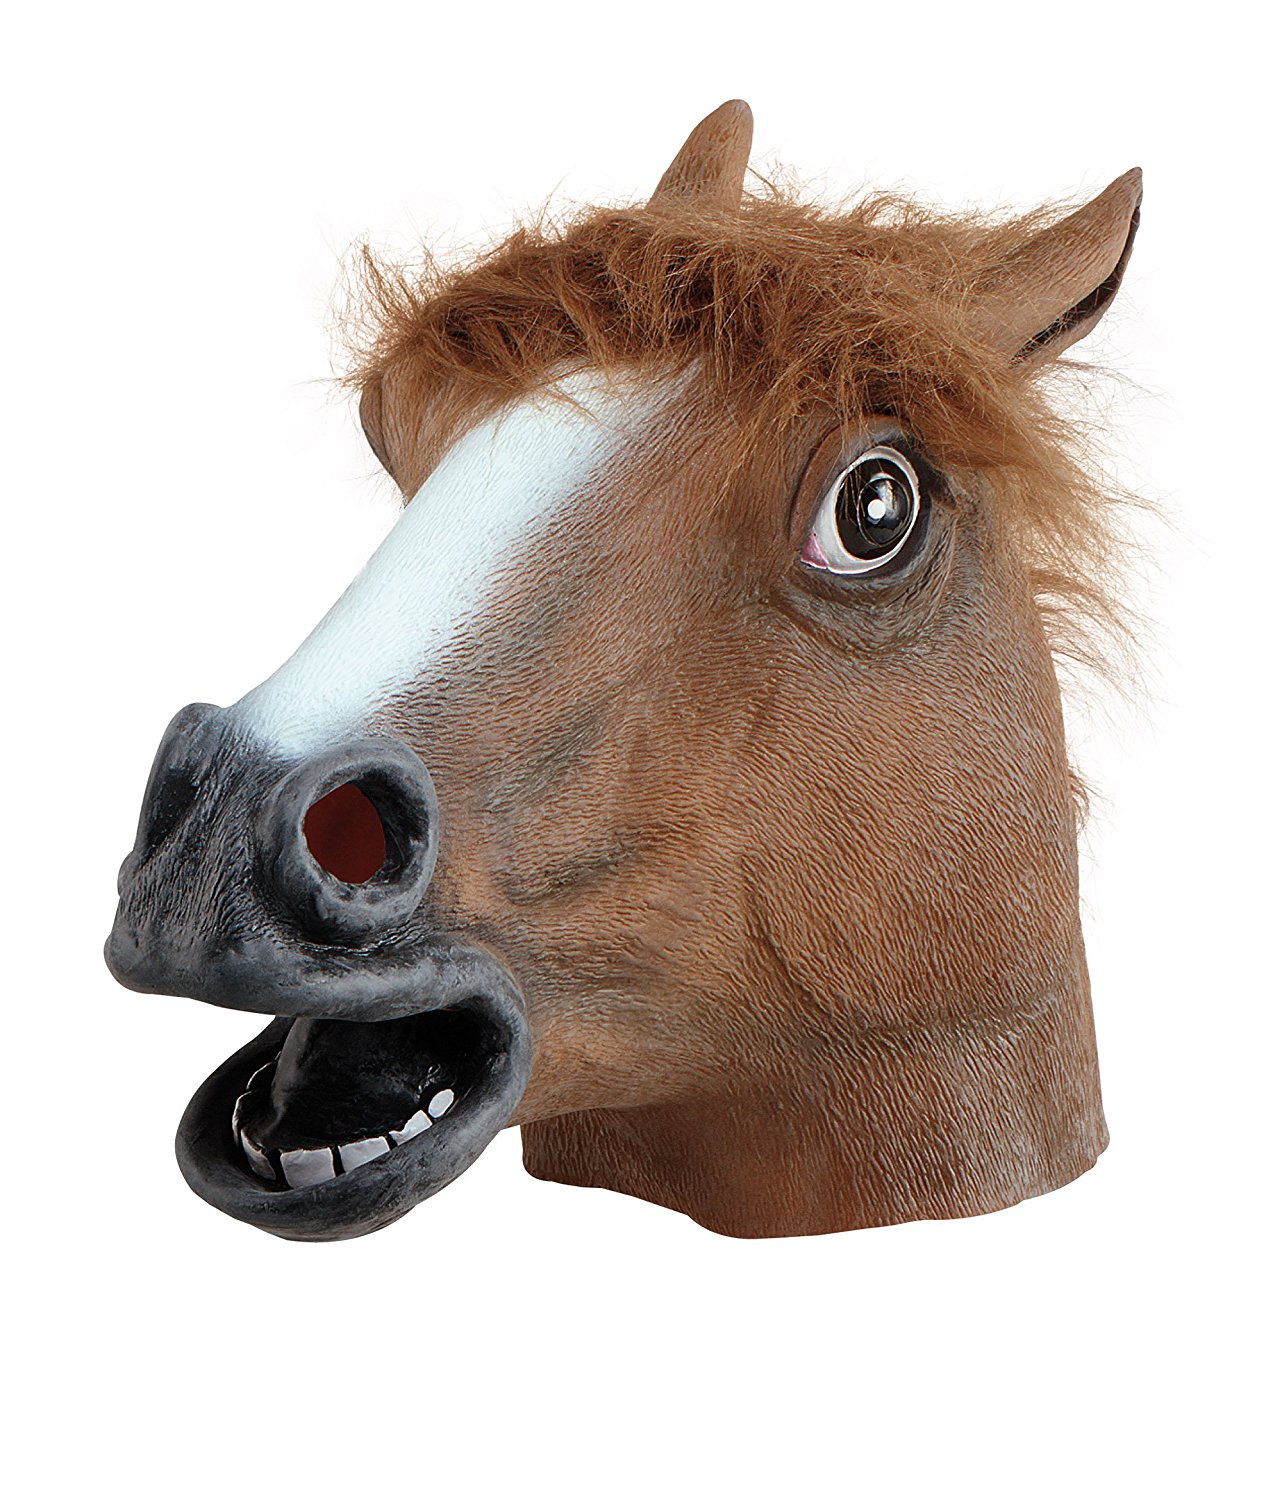 Bristol Novelty BM160 Horse Mask (One Size): Bristol Novelty: Amazon ...